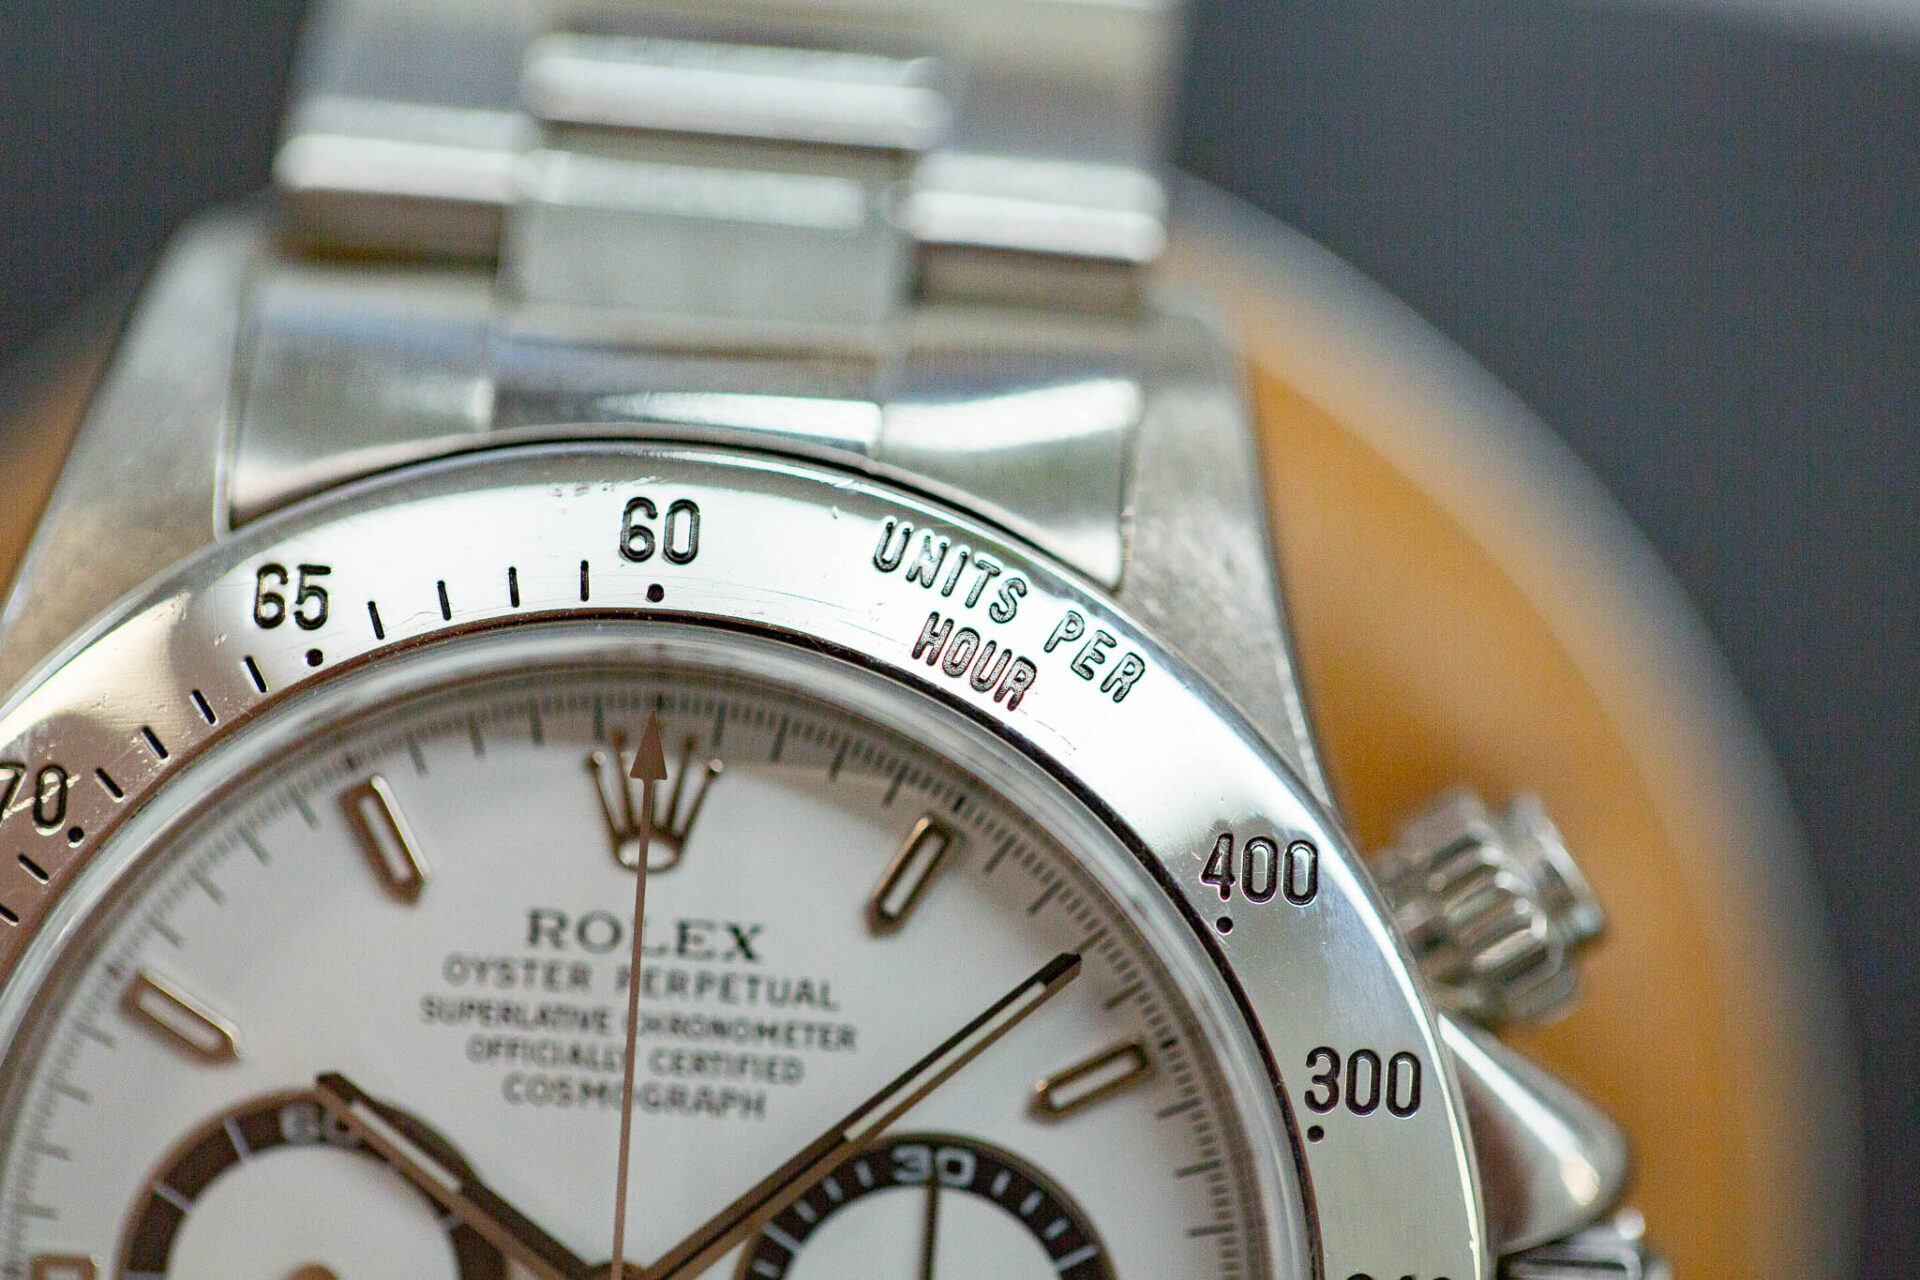 Rolex Daytona Zenith 16520 chronographe automatique